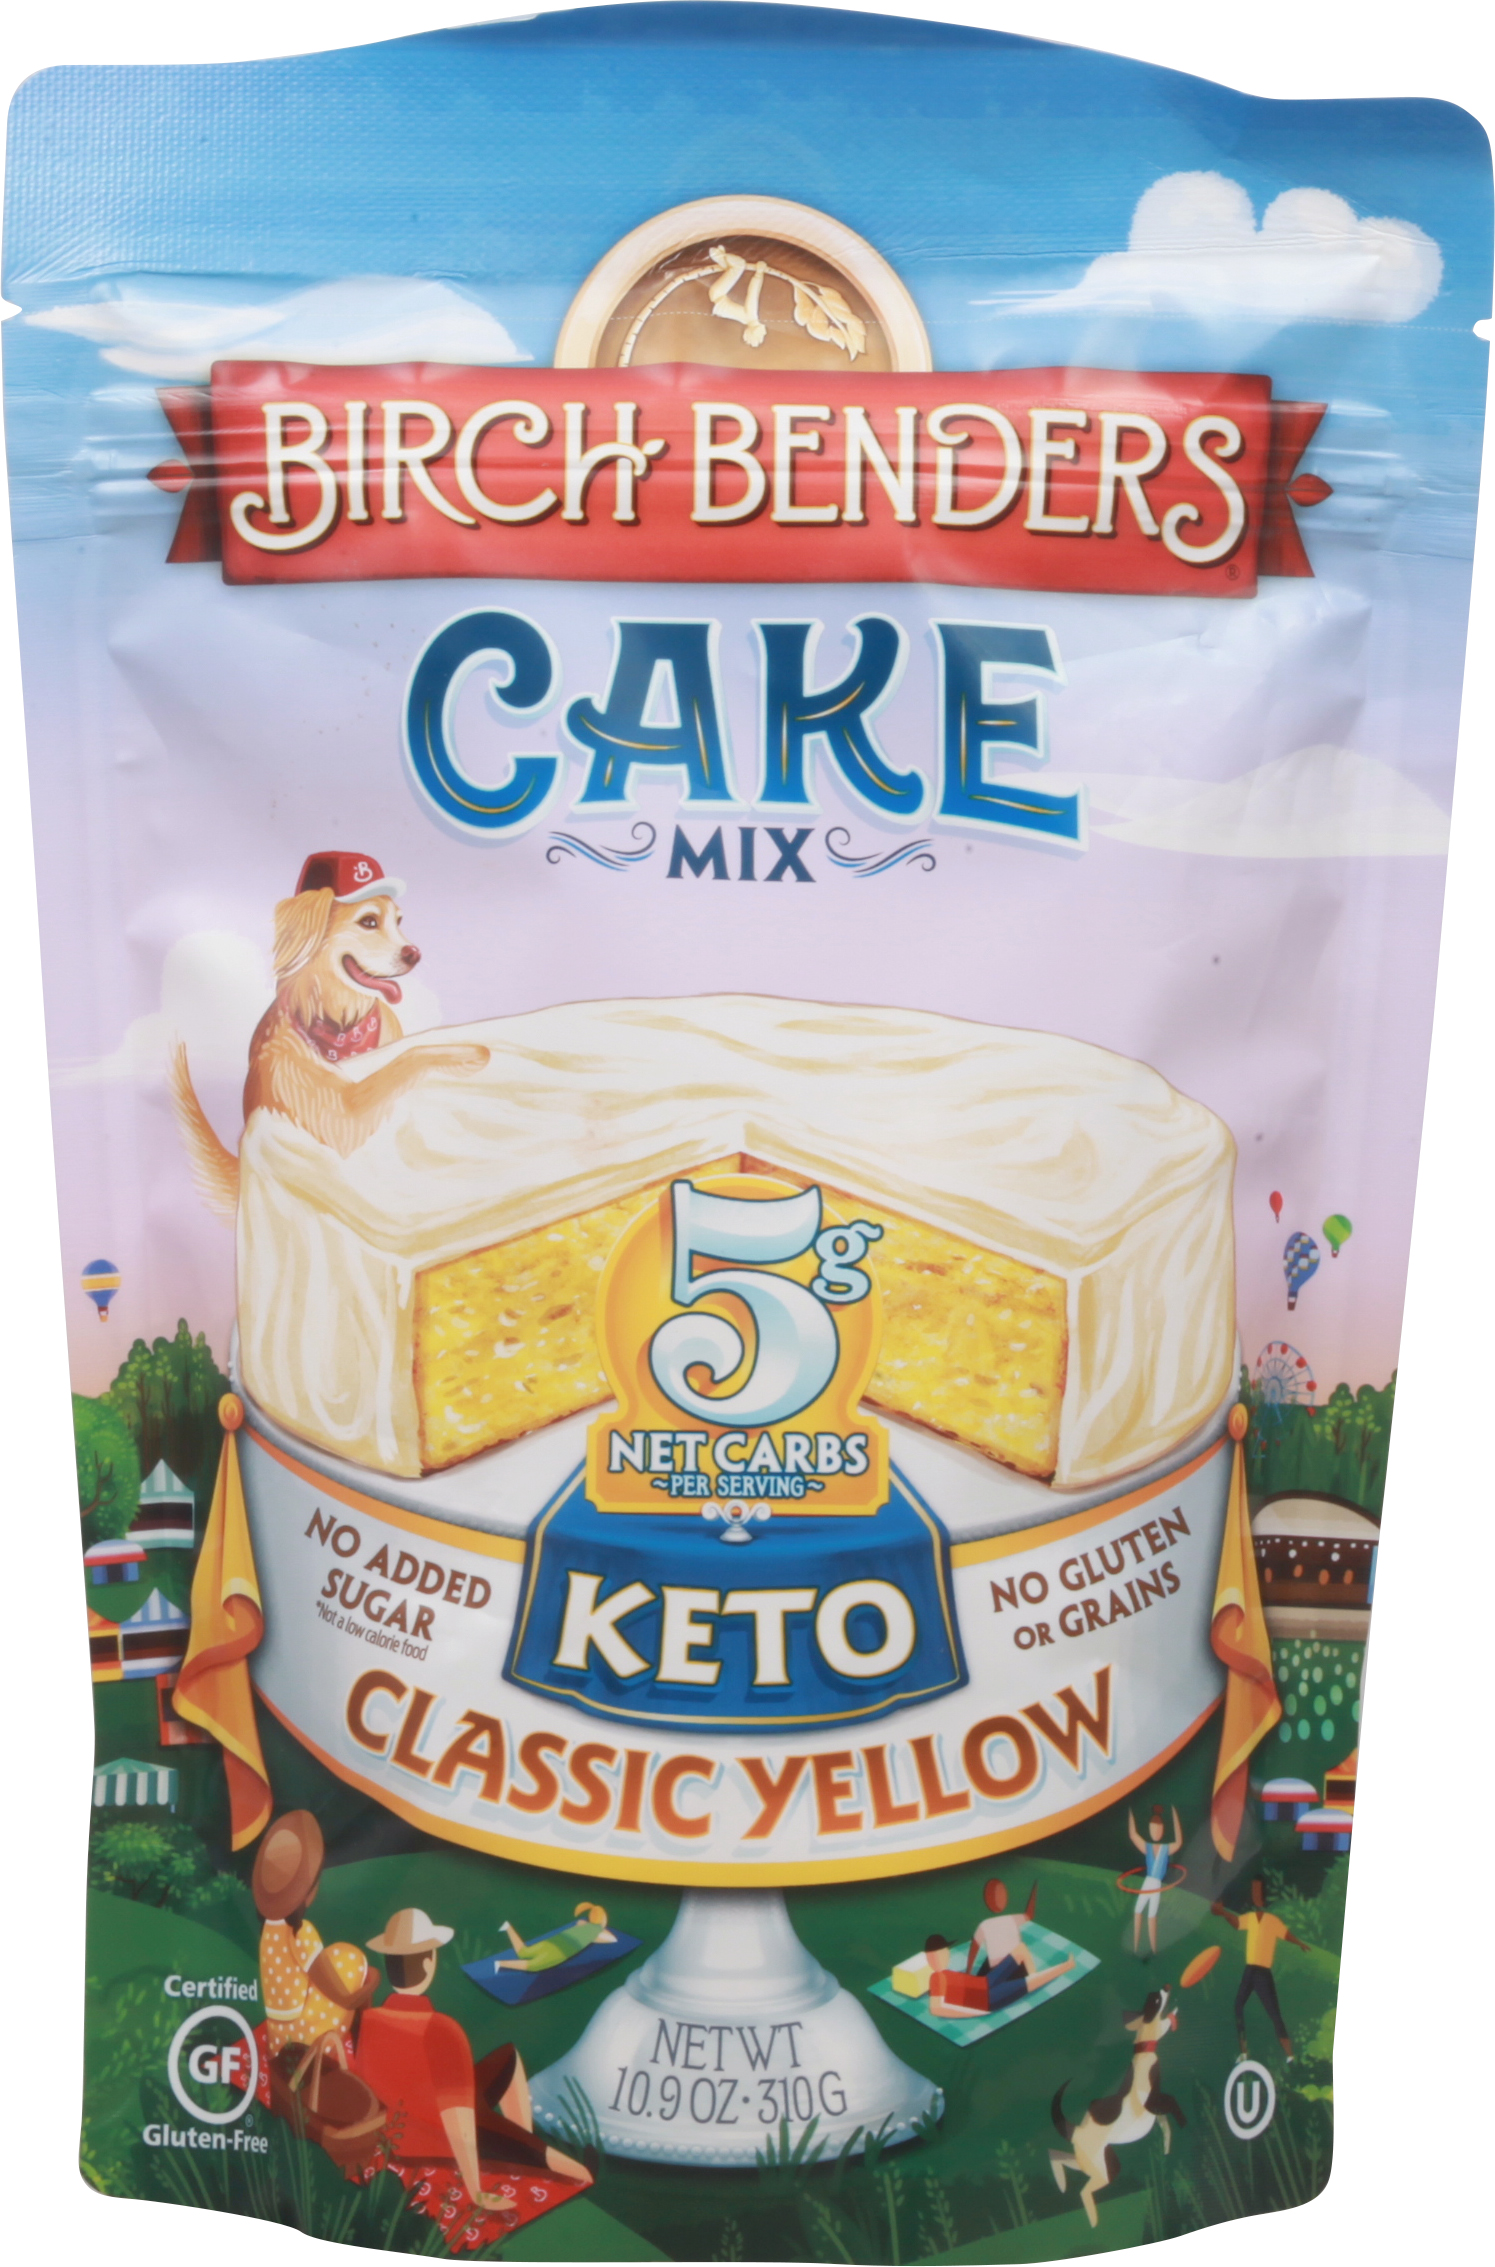 Birch Benders Keto Classic Yellow Cake Mix, 10.9oz - image 3 of 4